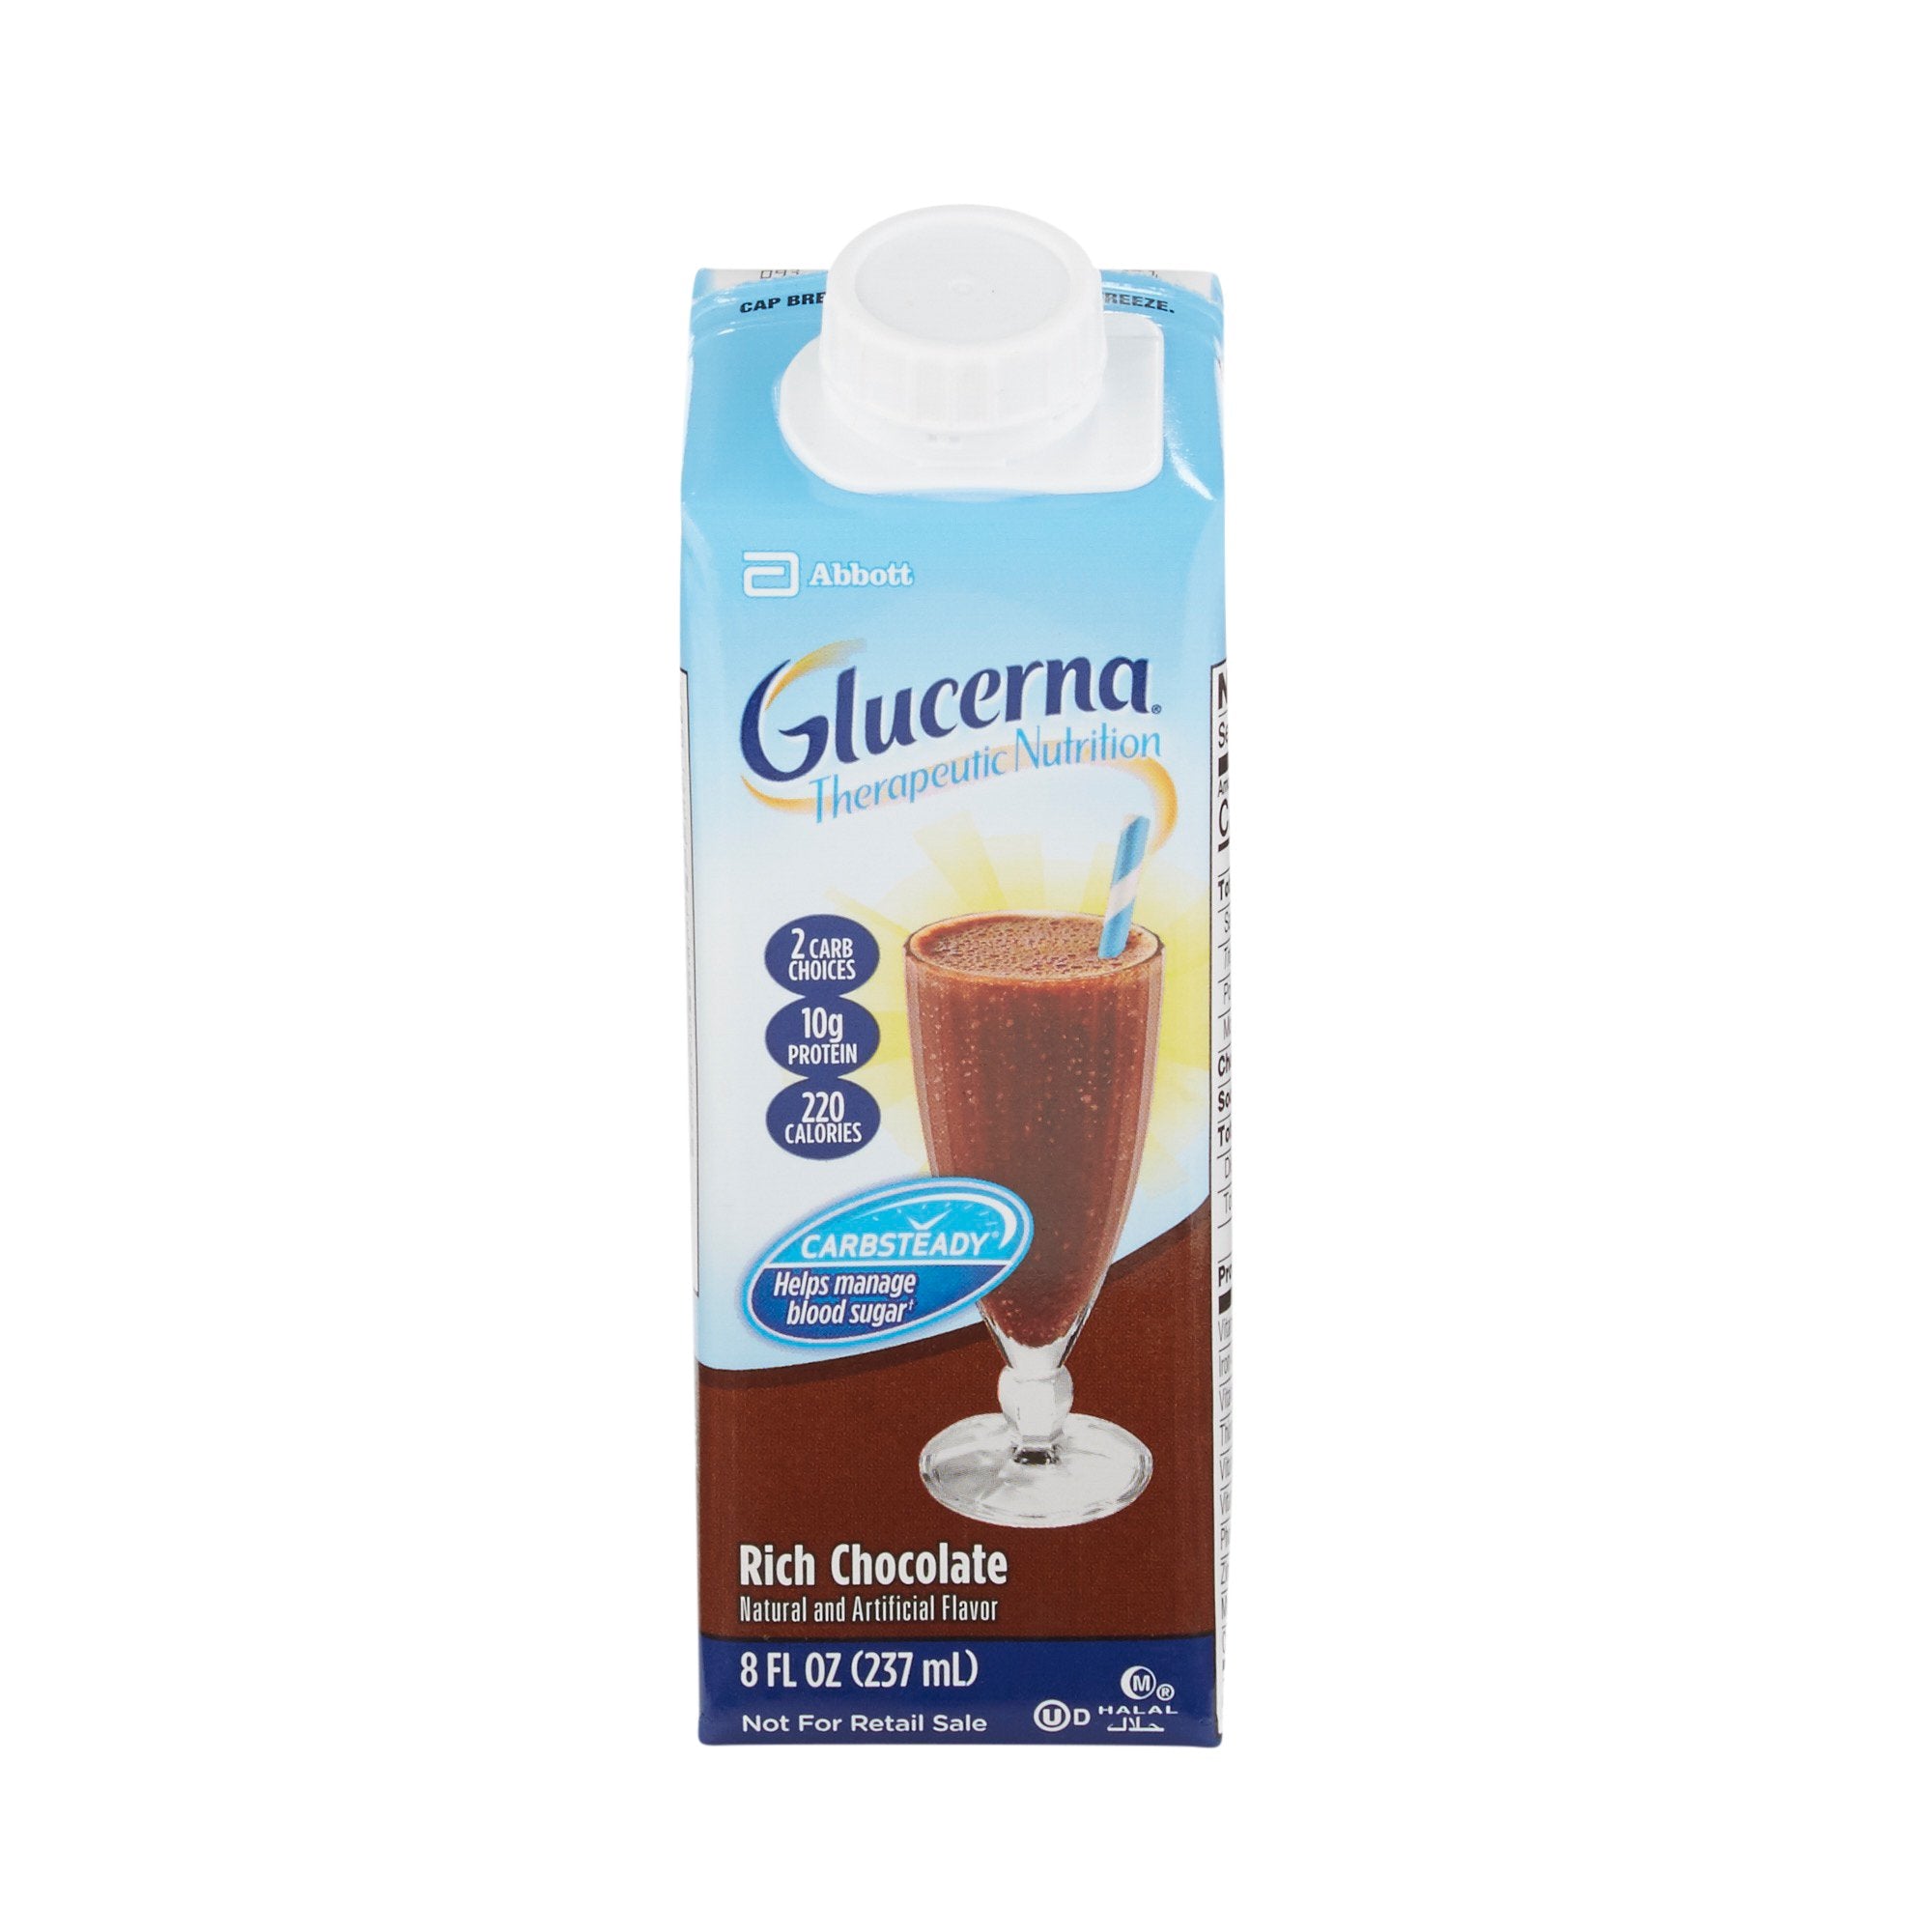 Oral Supplement Glucerna Therapeutic Nutrition Shake Rich Chocolate Flavor Liquid 8 oz. Carton